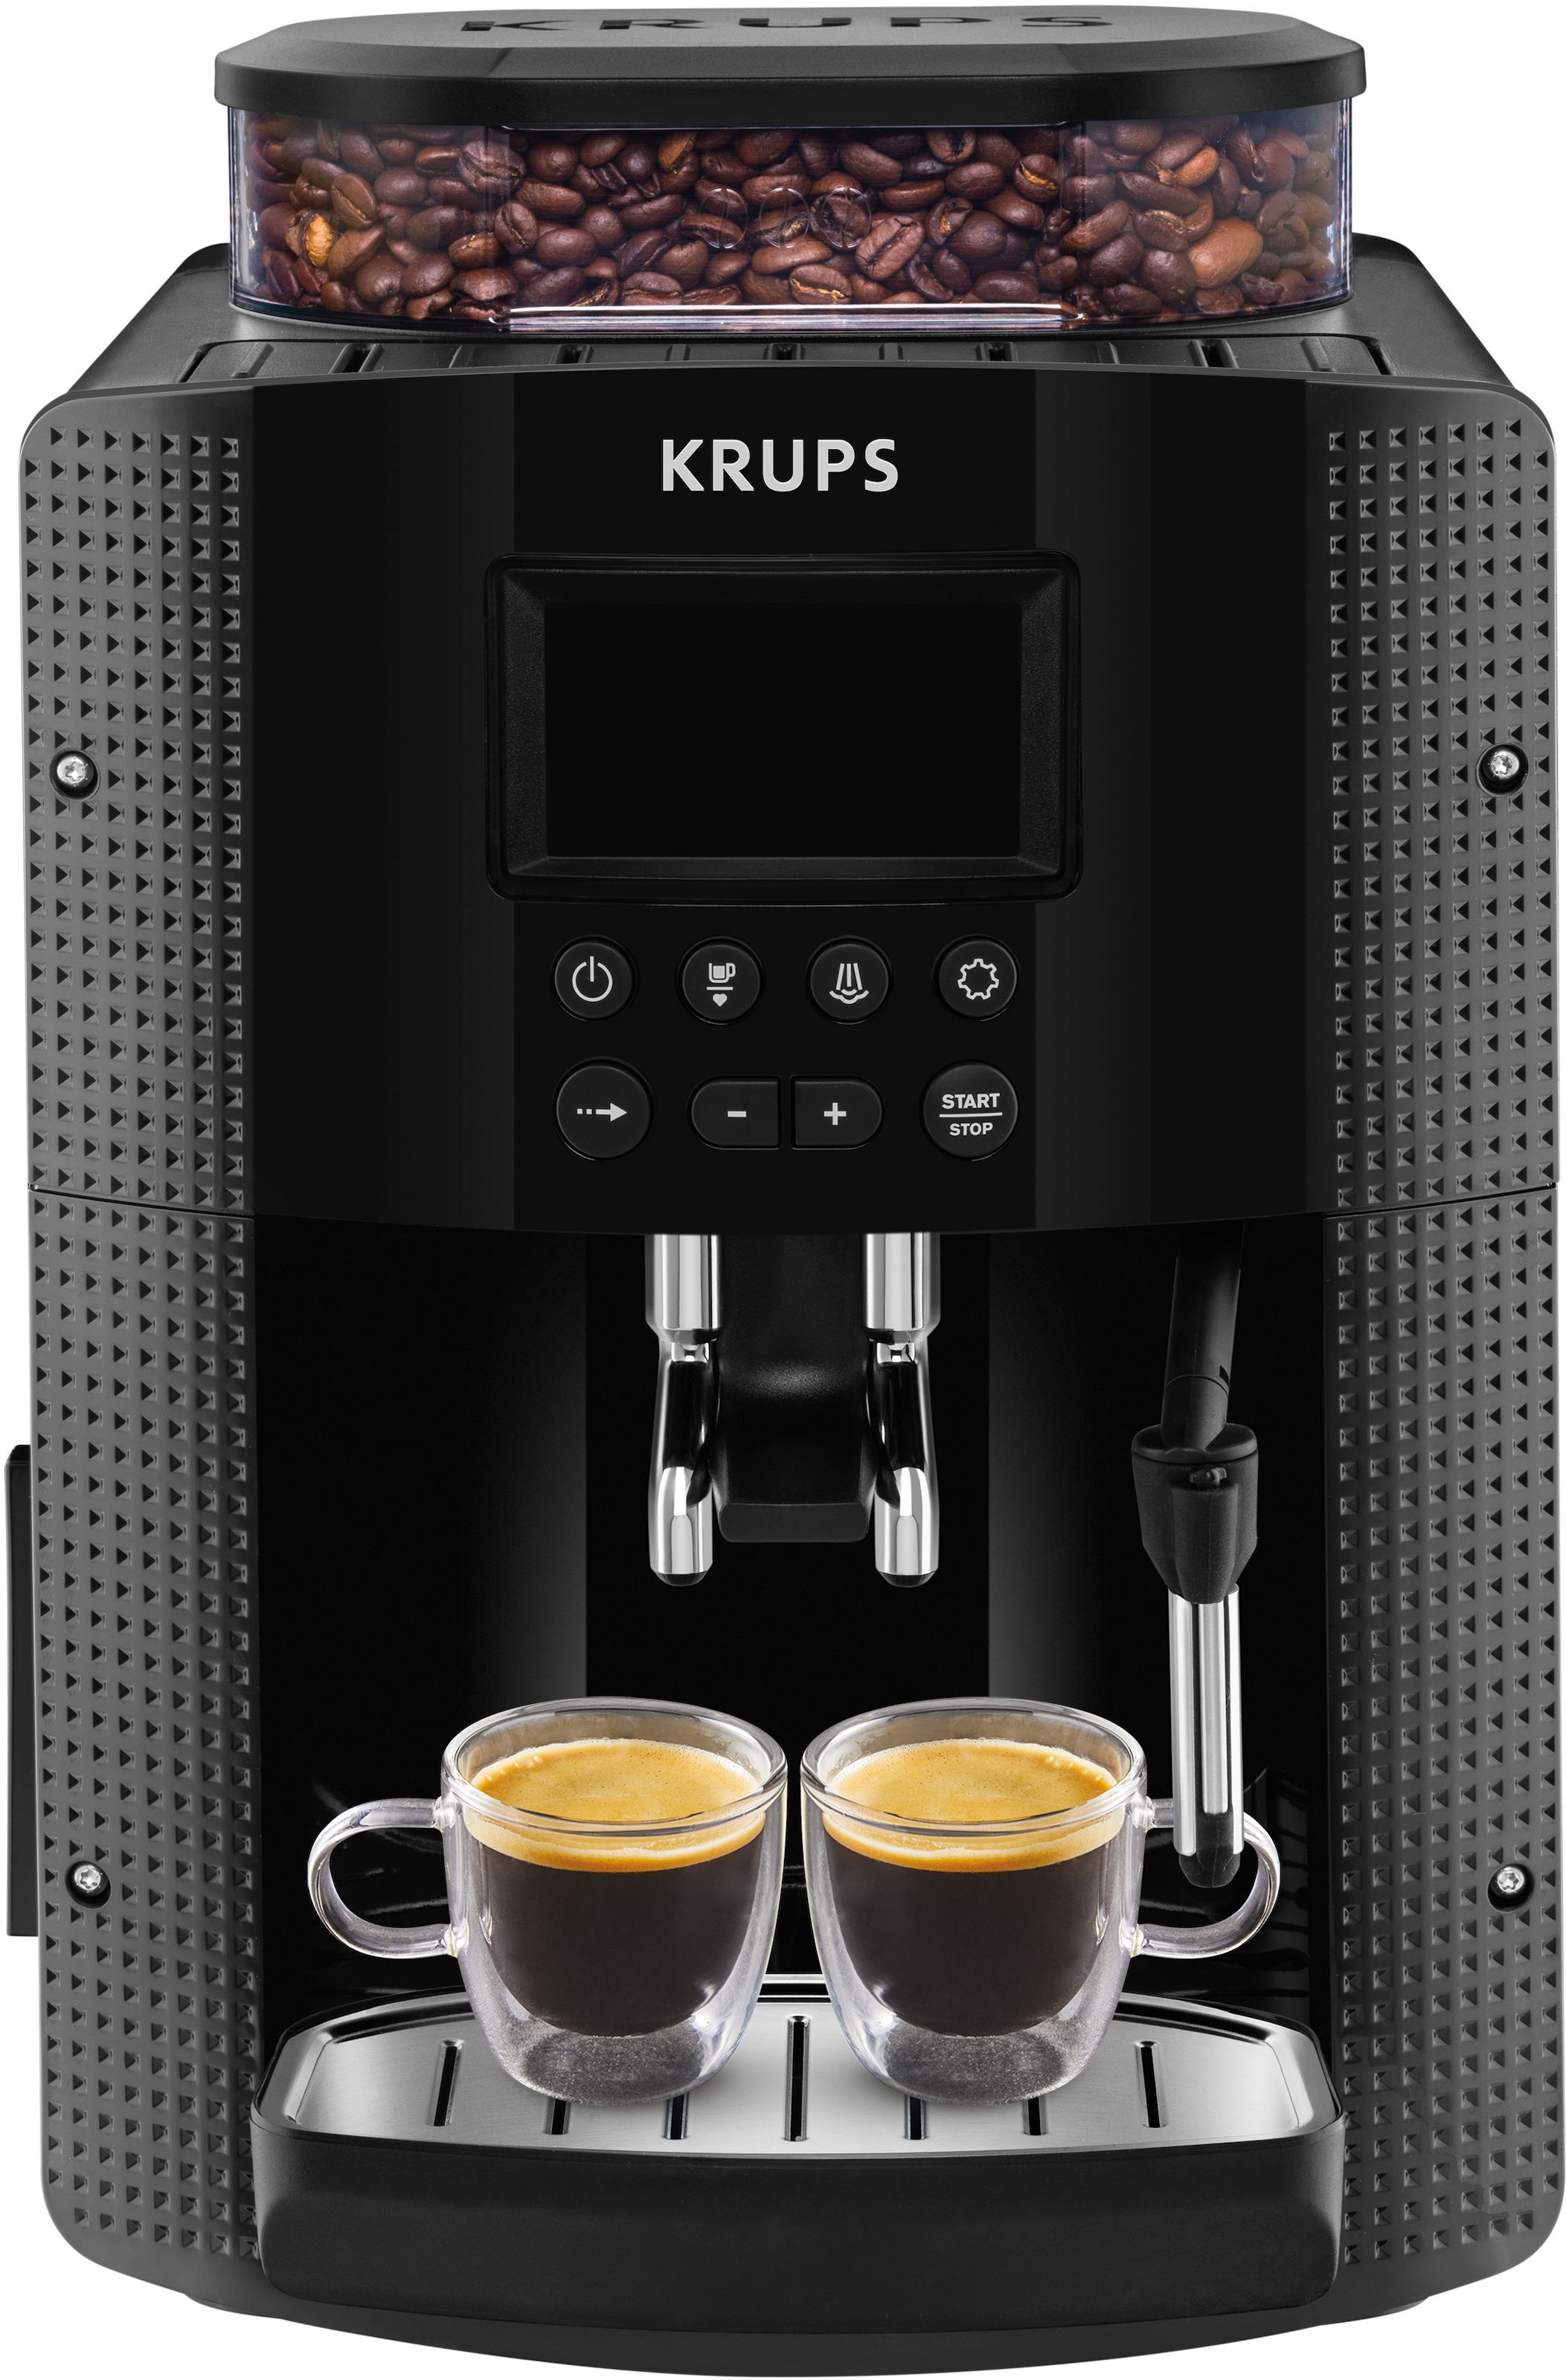 Krups Kaffeevollautomat »EA8150«, Arabica Display, LCD-Display, Speichermodus, Dampfdüse für Cappuccino